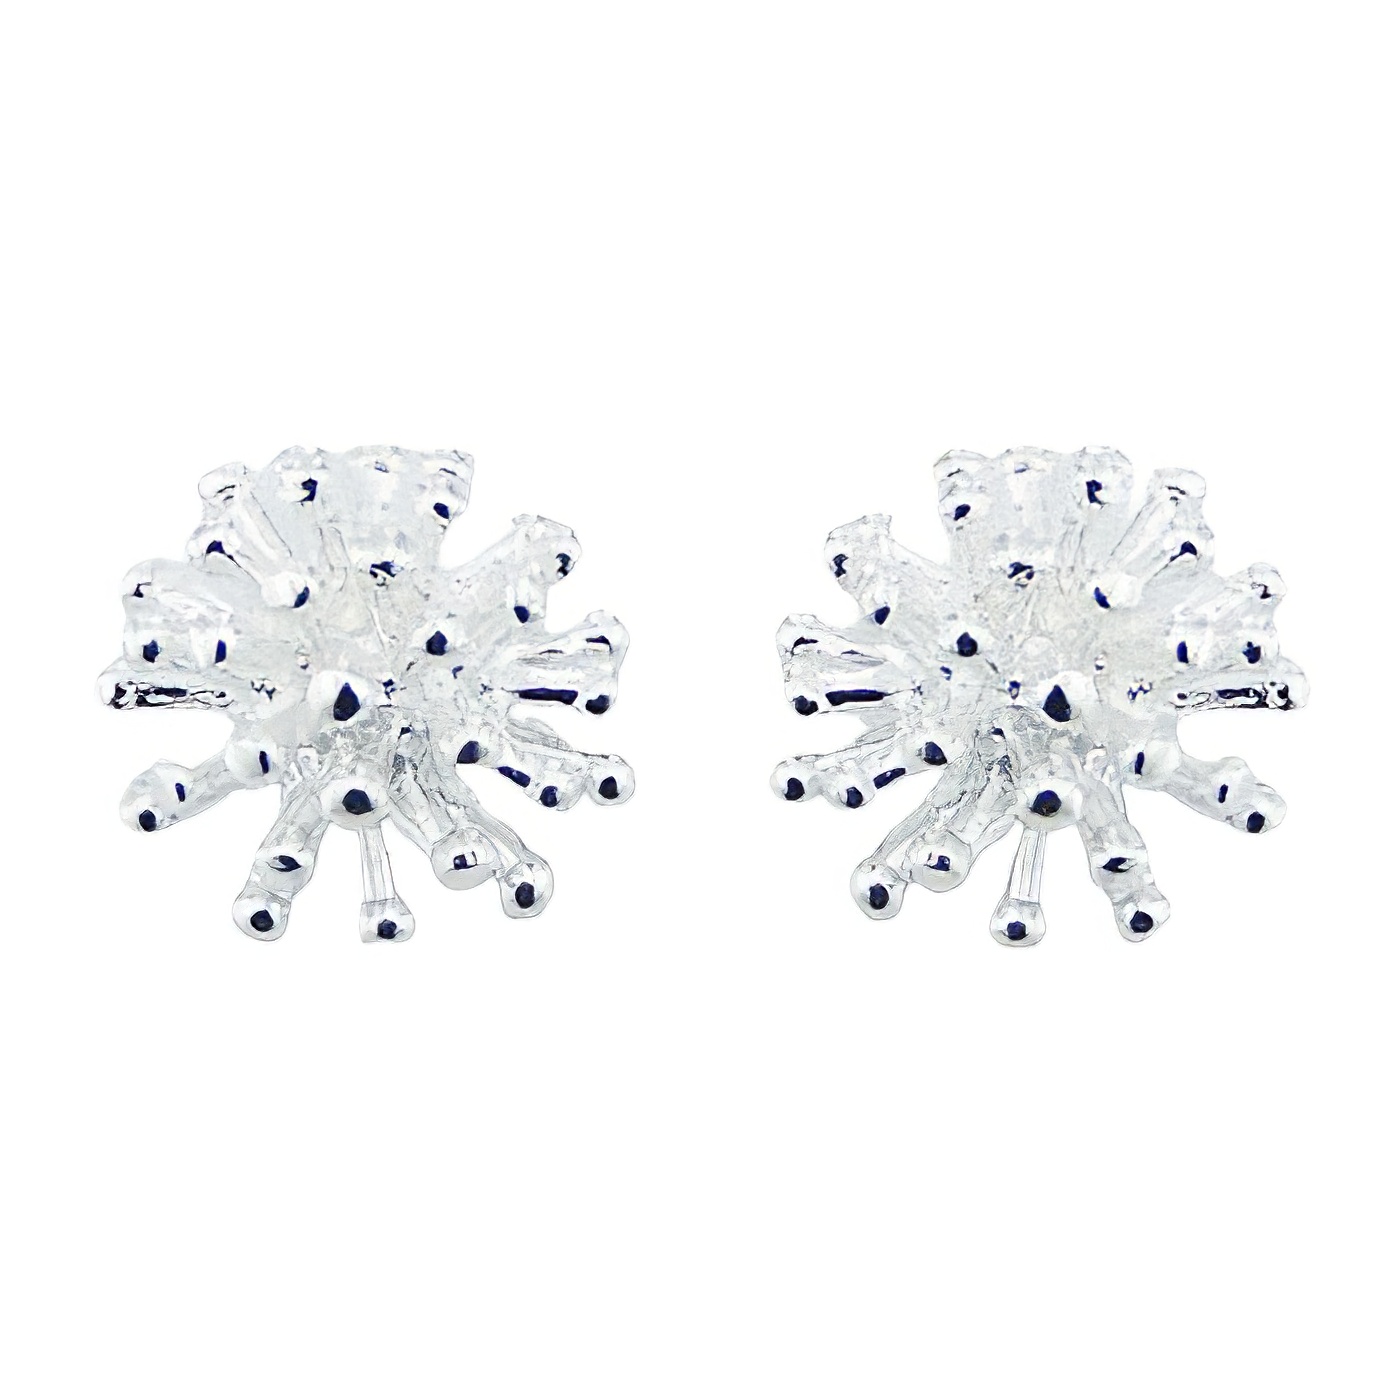 Designer Earrings Sterling Silver Cluster Studs by BeYindi 